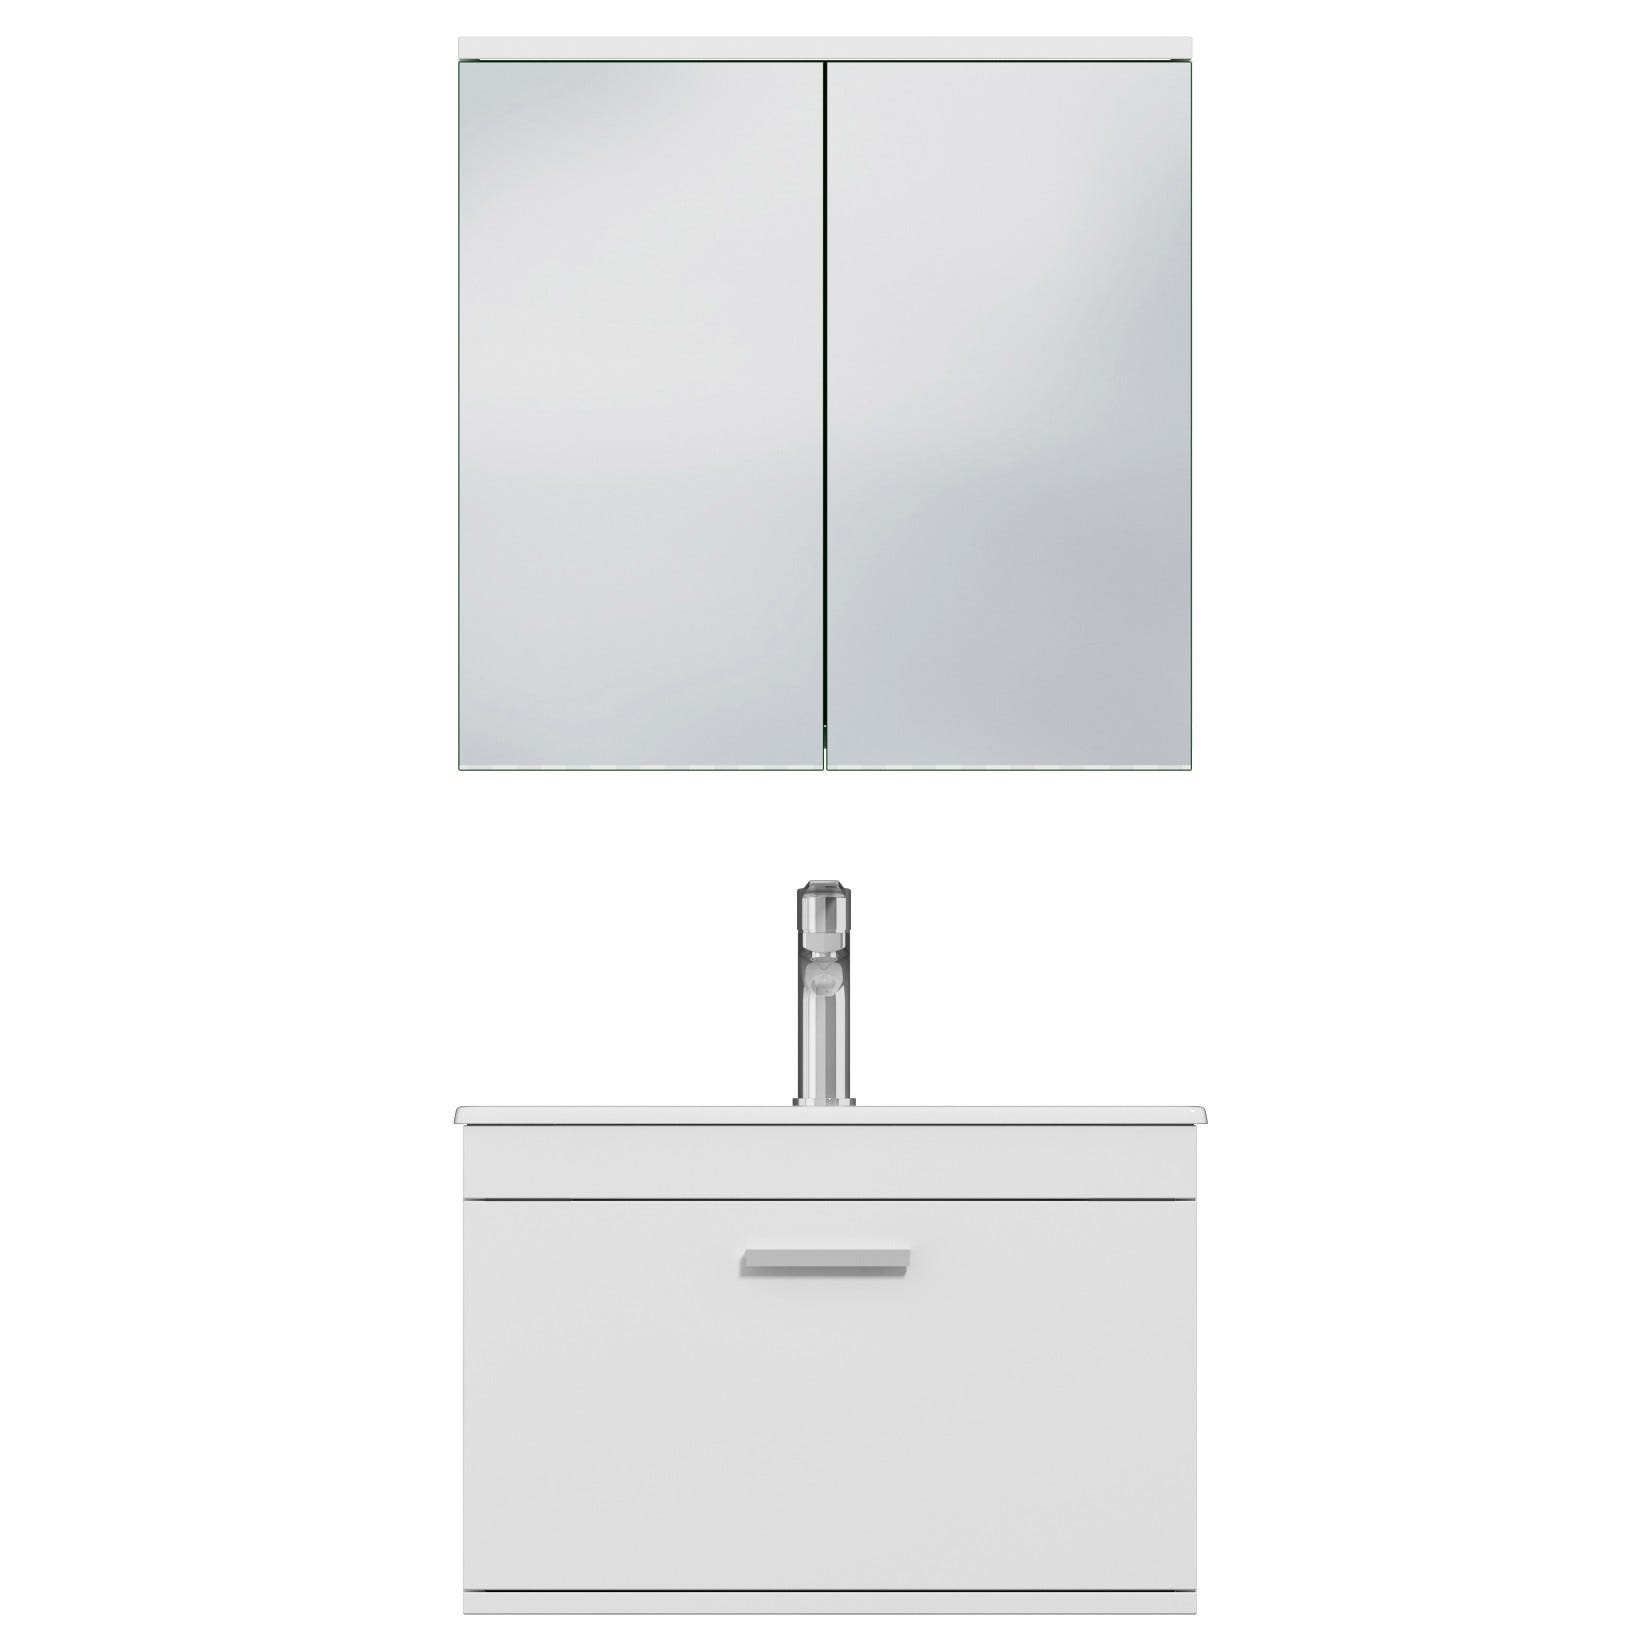 RUBITE Meuble salle de bain simple vasque 1 tiroir blanc largeur 60 cm + miroir armoire 3